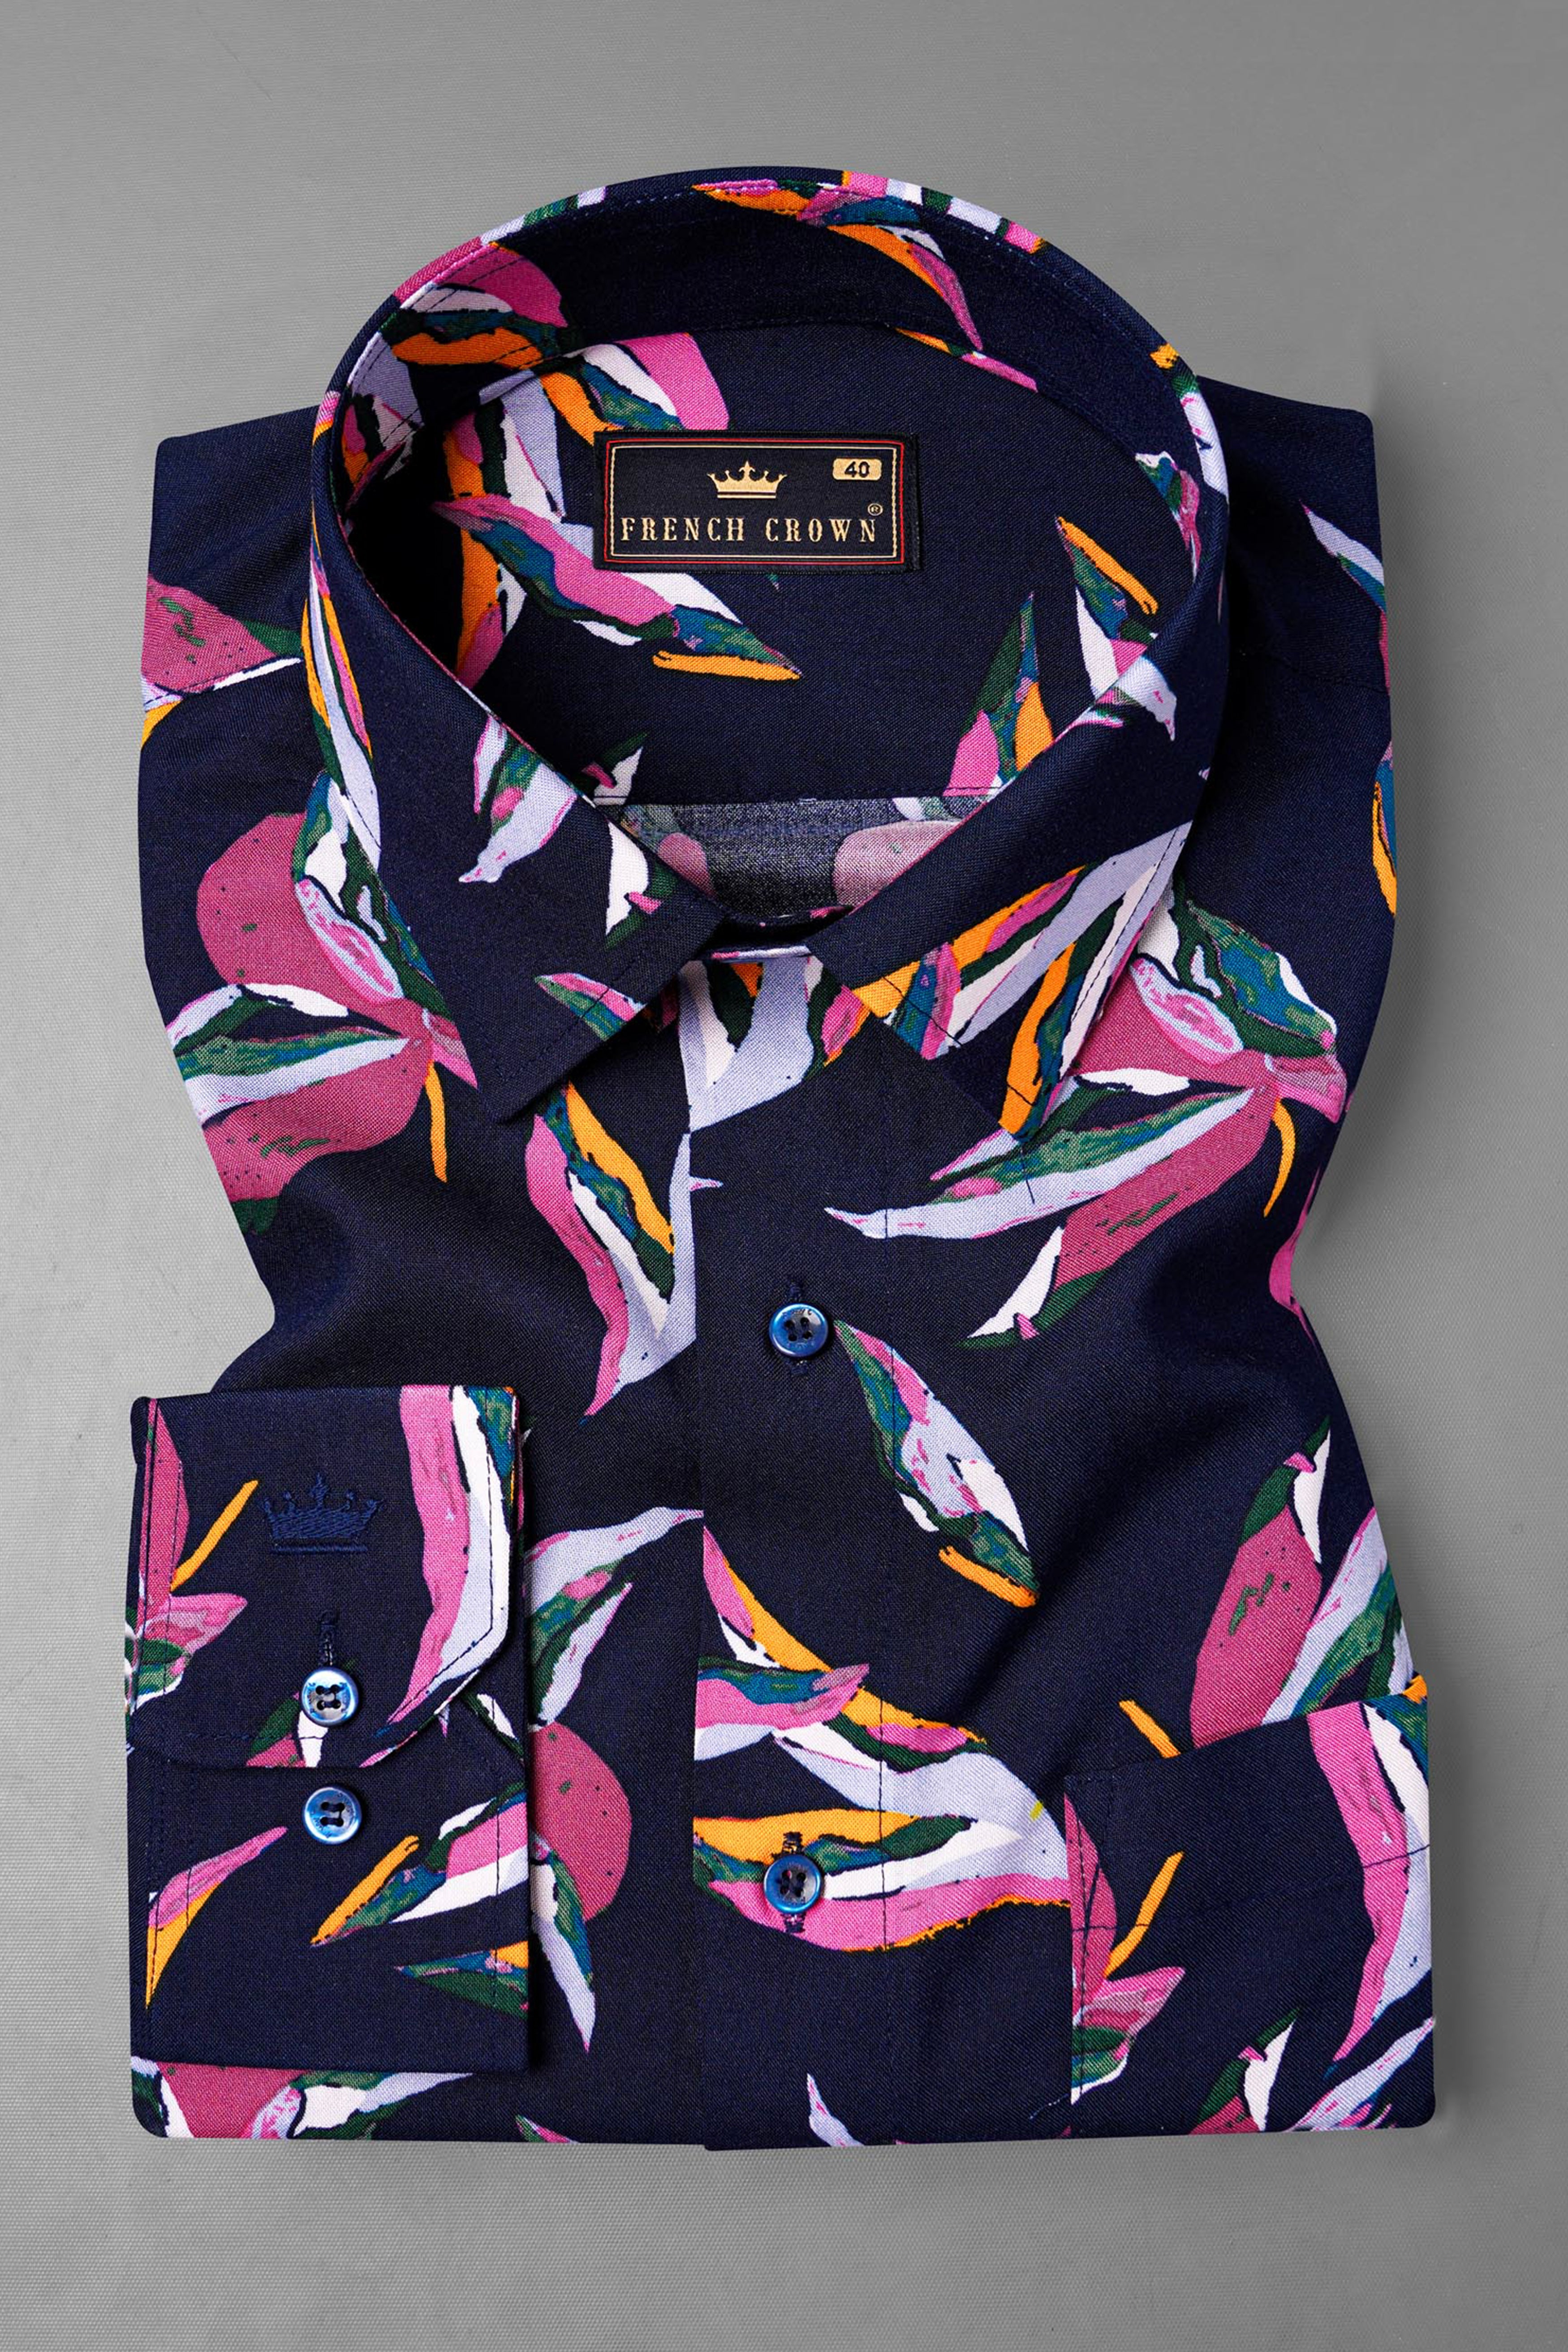 Mirage Blue With Fandango Pink Floral Printed Premium Tencel Shirt